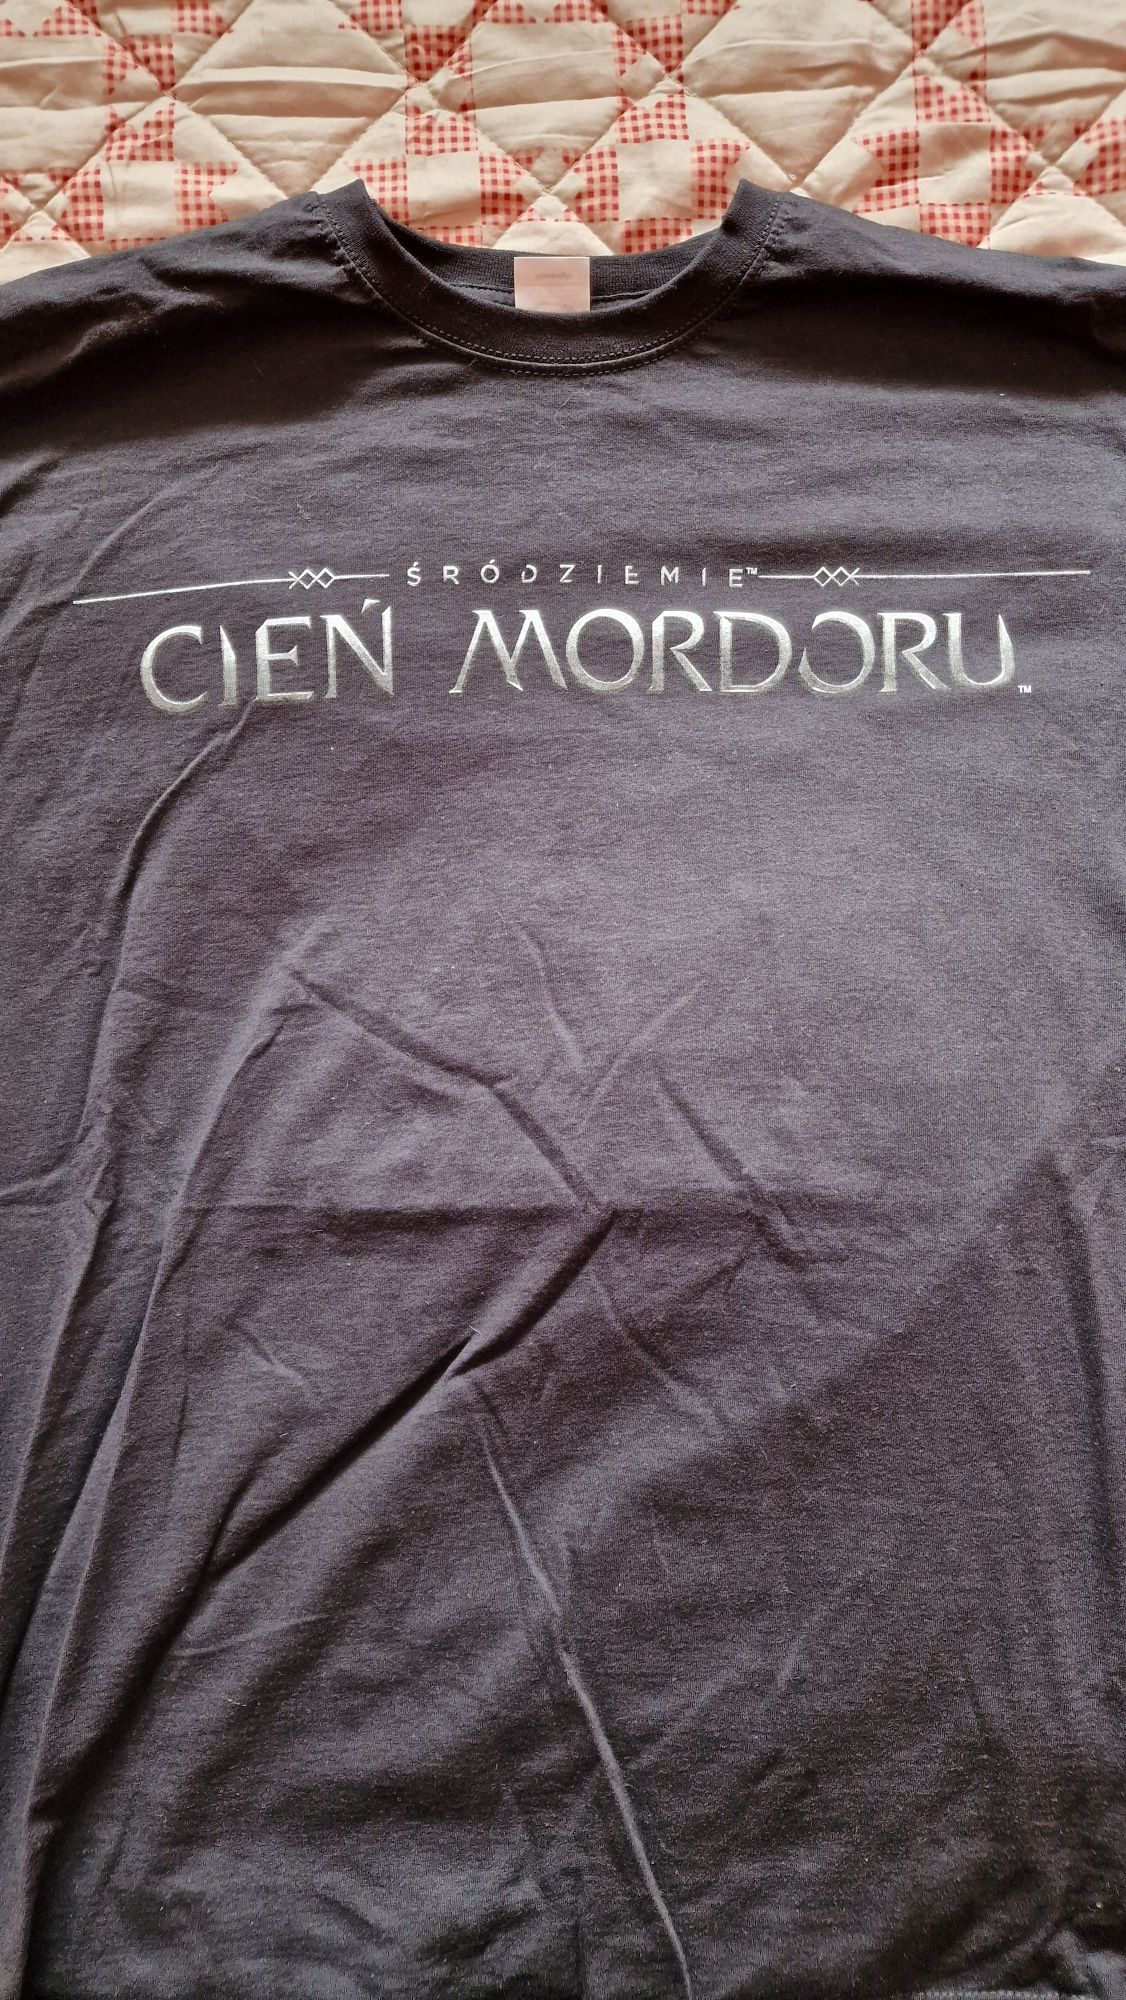 Śródziemie Cień Mordoru koszulka T-shirt L